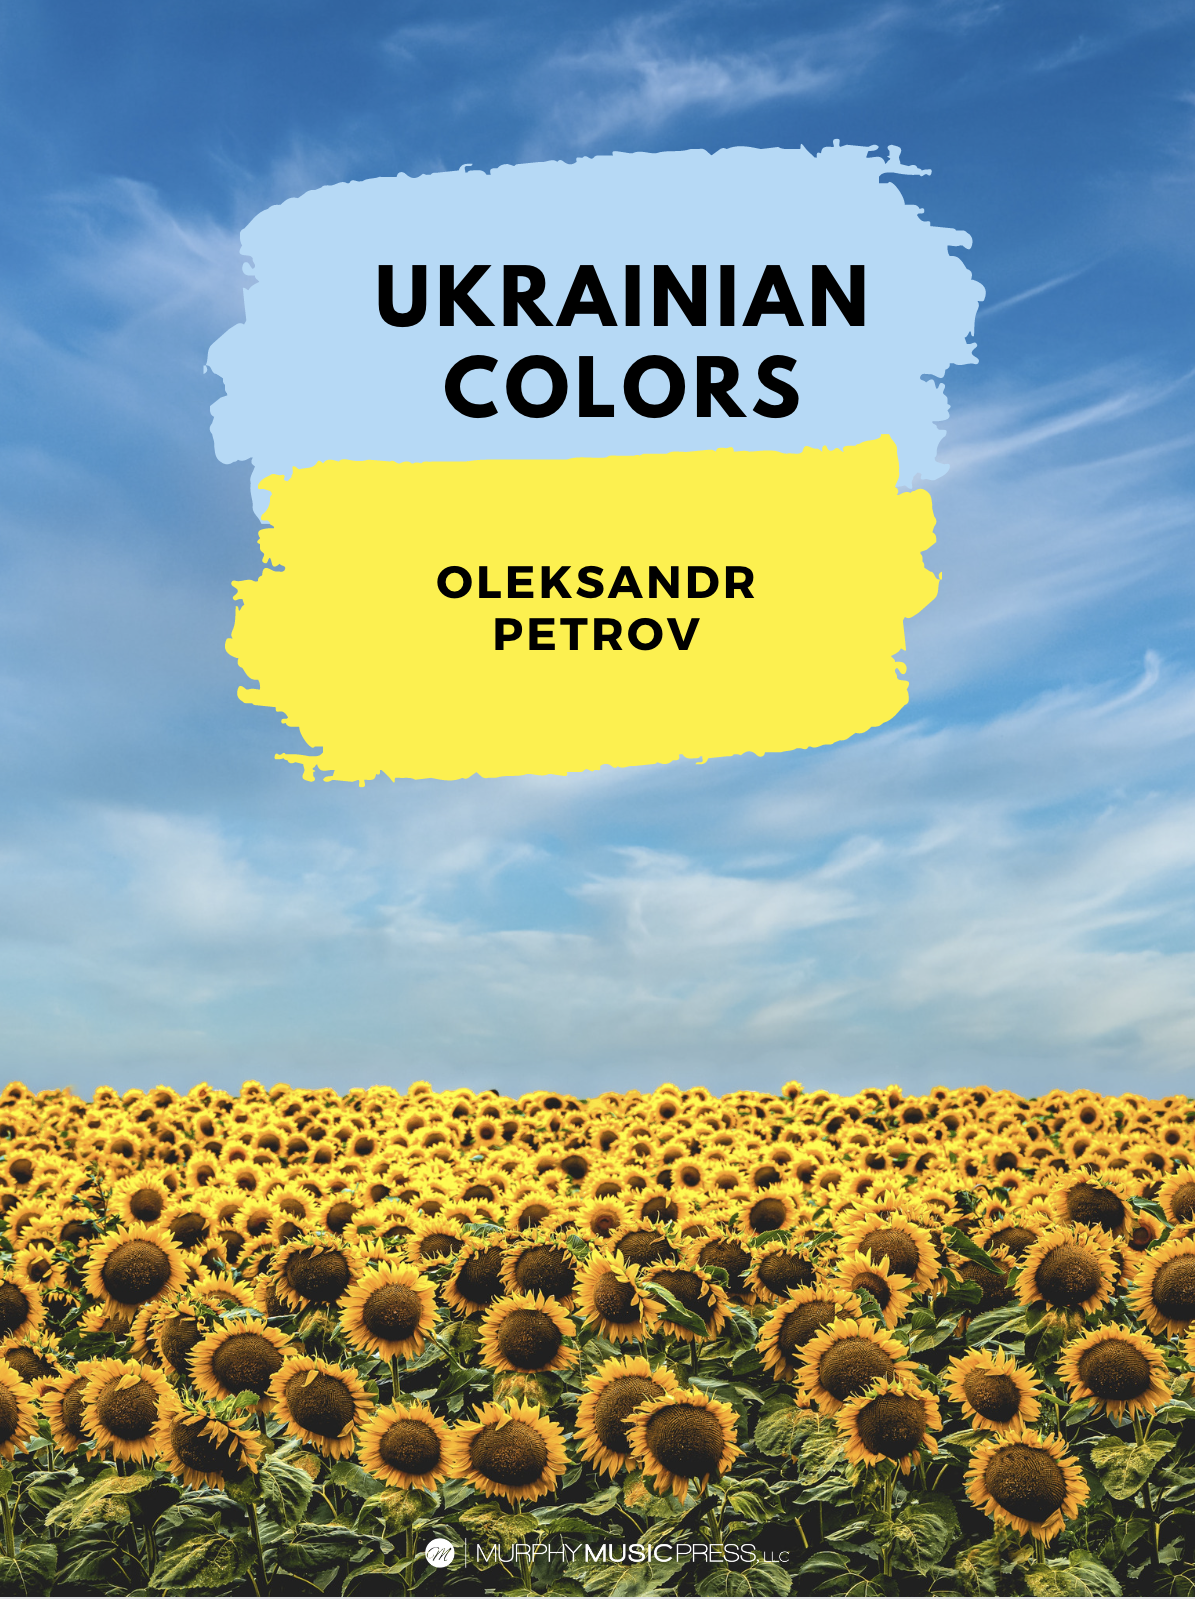 Ukrainian Colors by Oleksandr Petrov